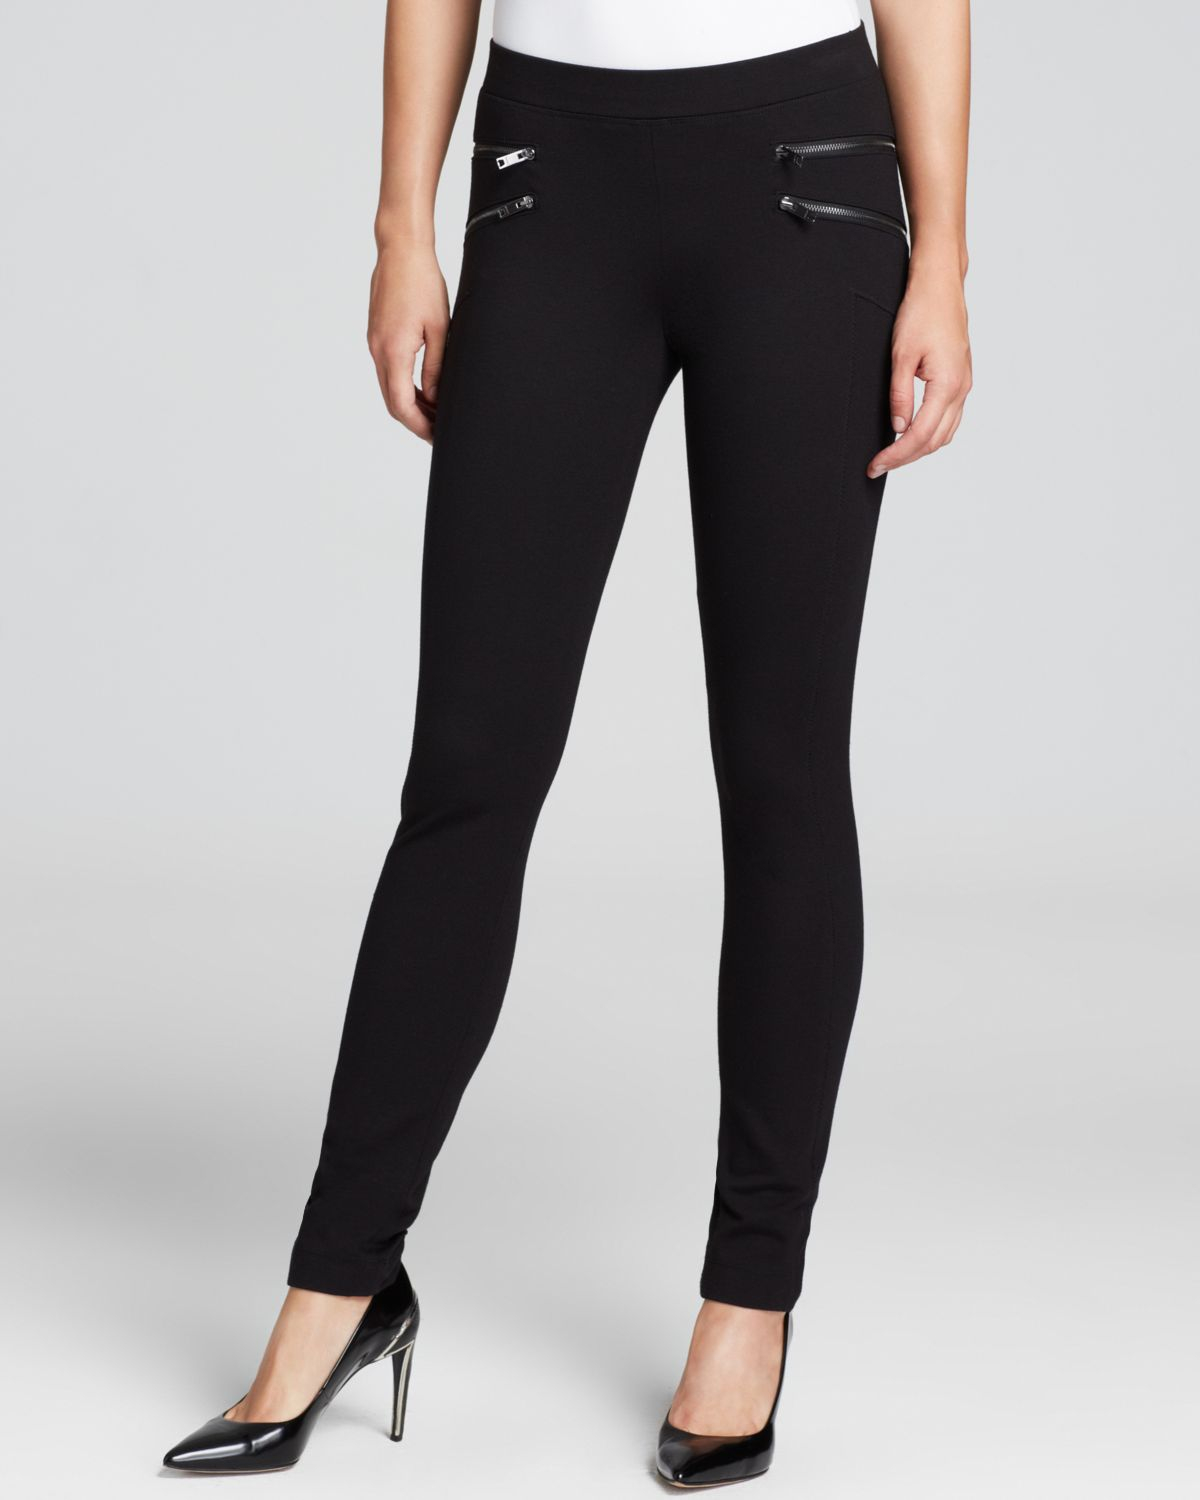 Lyst - DKNY Double Zip Leggings in Black